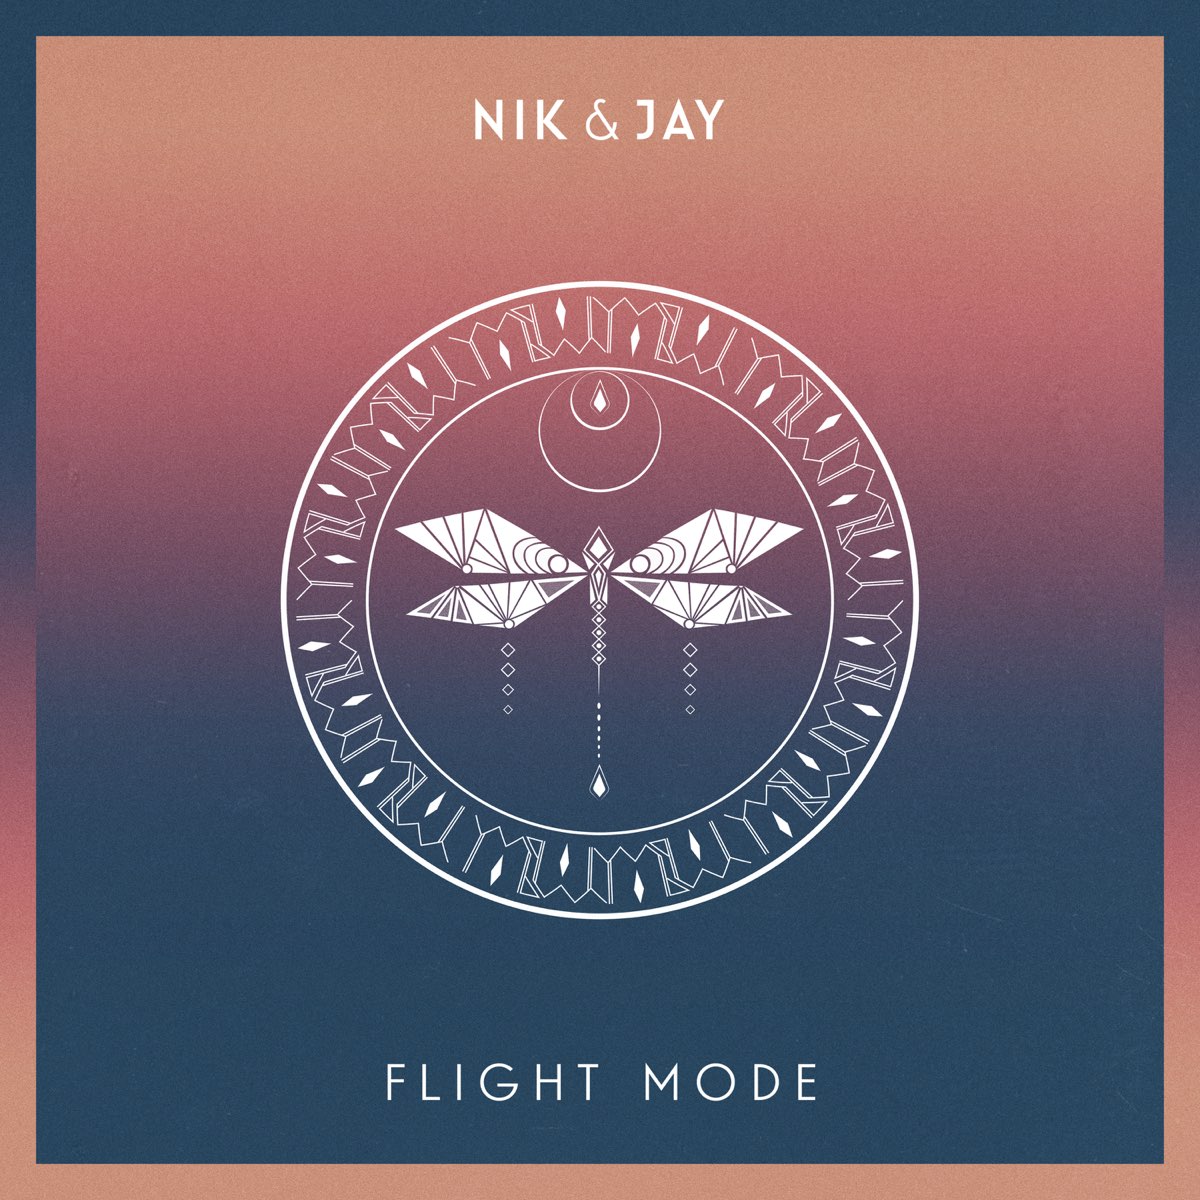 overgive for eksempel lunge Flight Mode - Single by Nik & Jay on Apple Music